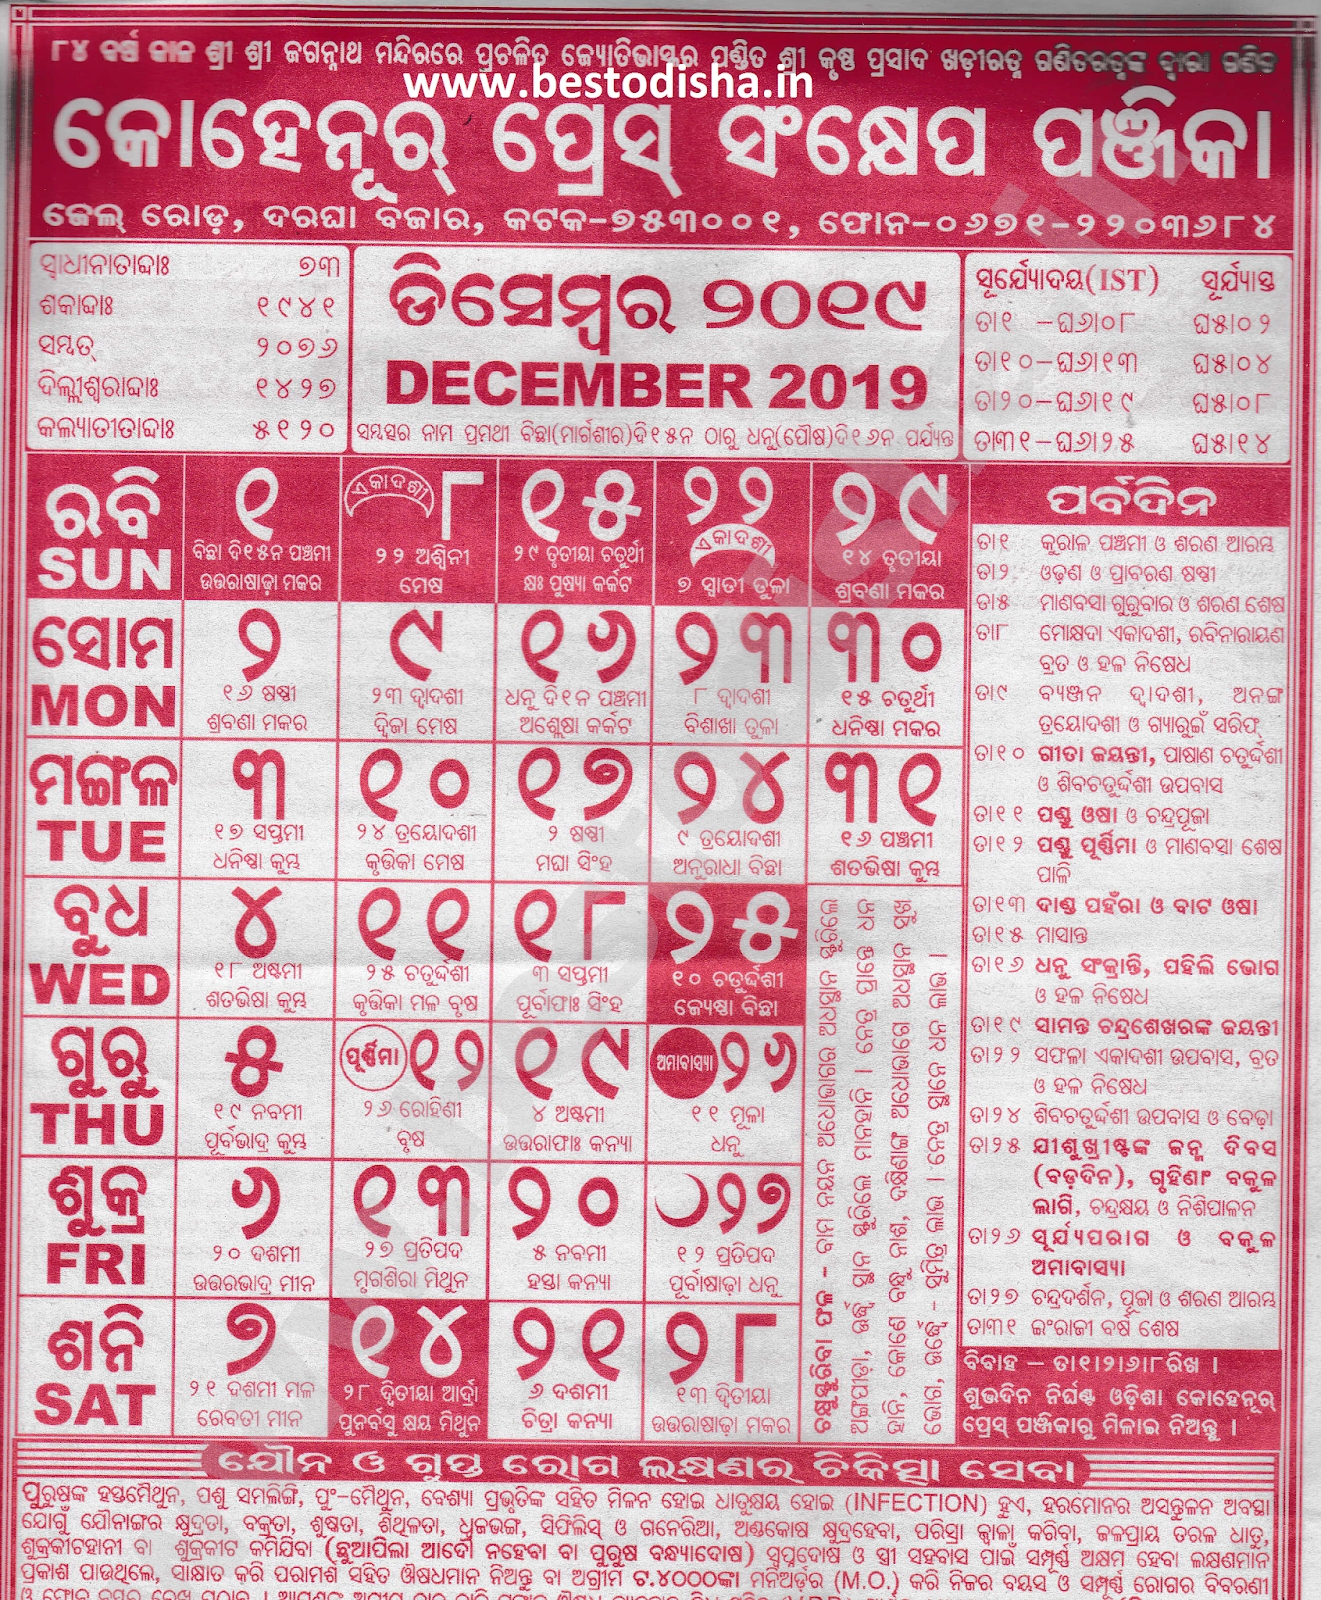 Best Odisha: Kohinoor Odia Calendar 2019 Pdf Download Here-January 2020 Calendar Odia